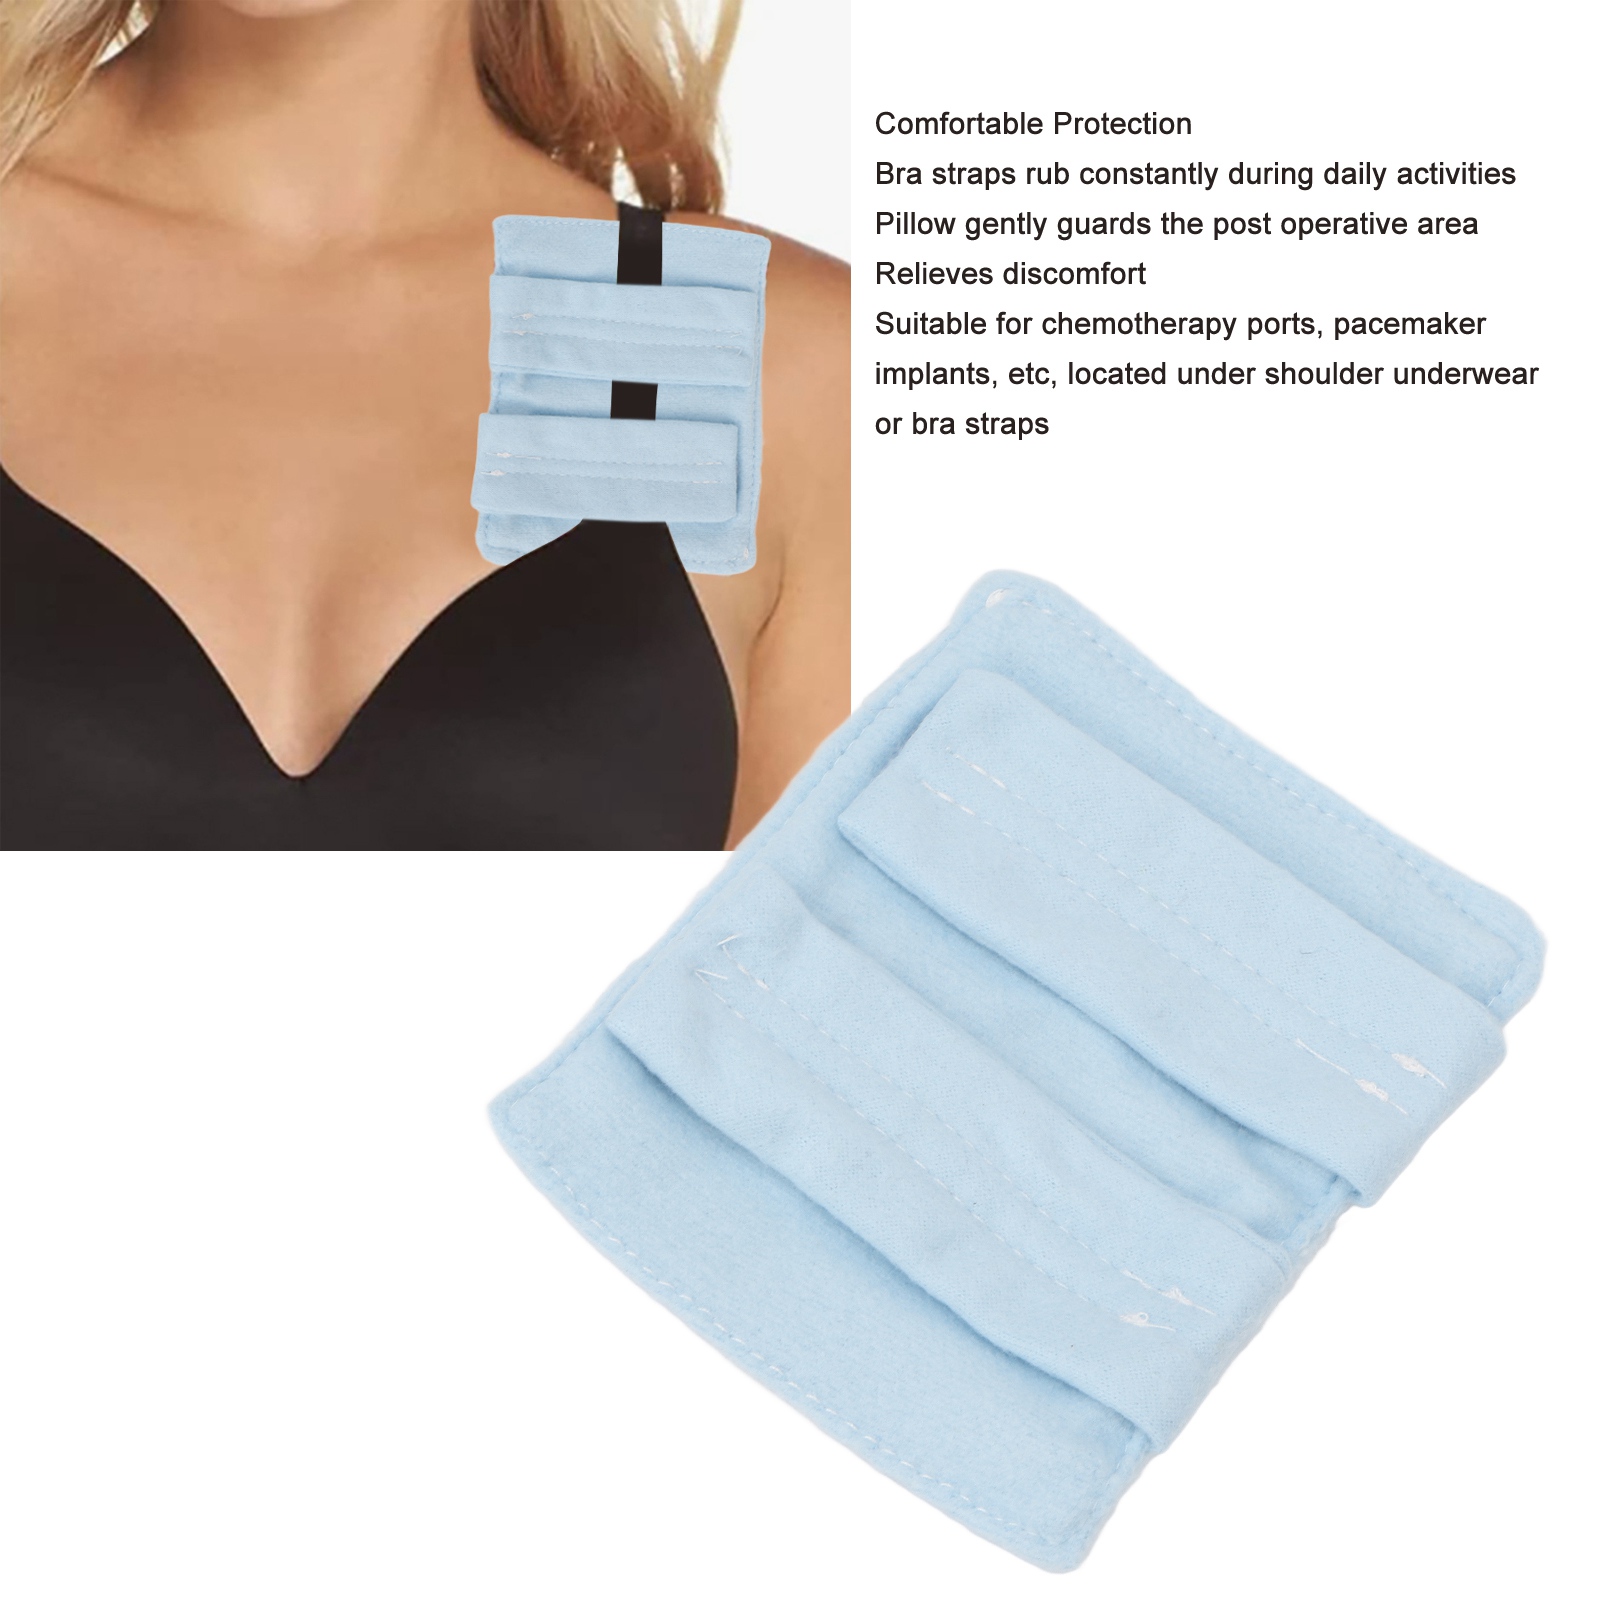 Wondering] Health Pacemaker Pillow Soft Prevent Slip Bra Strap